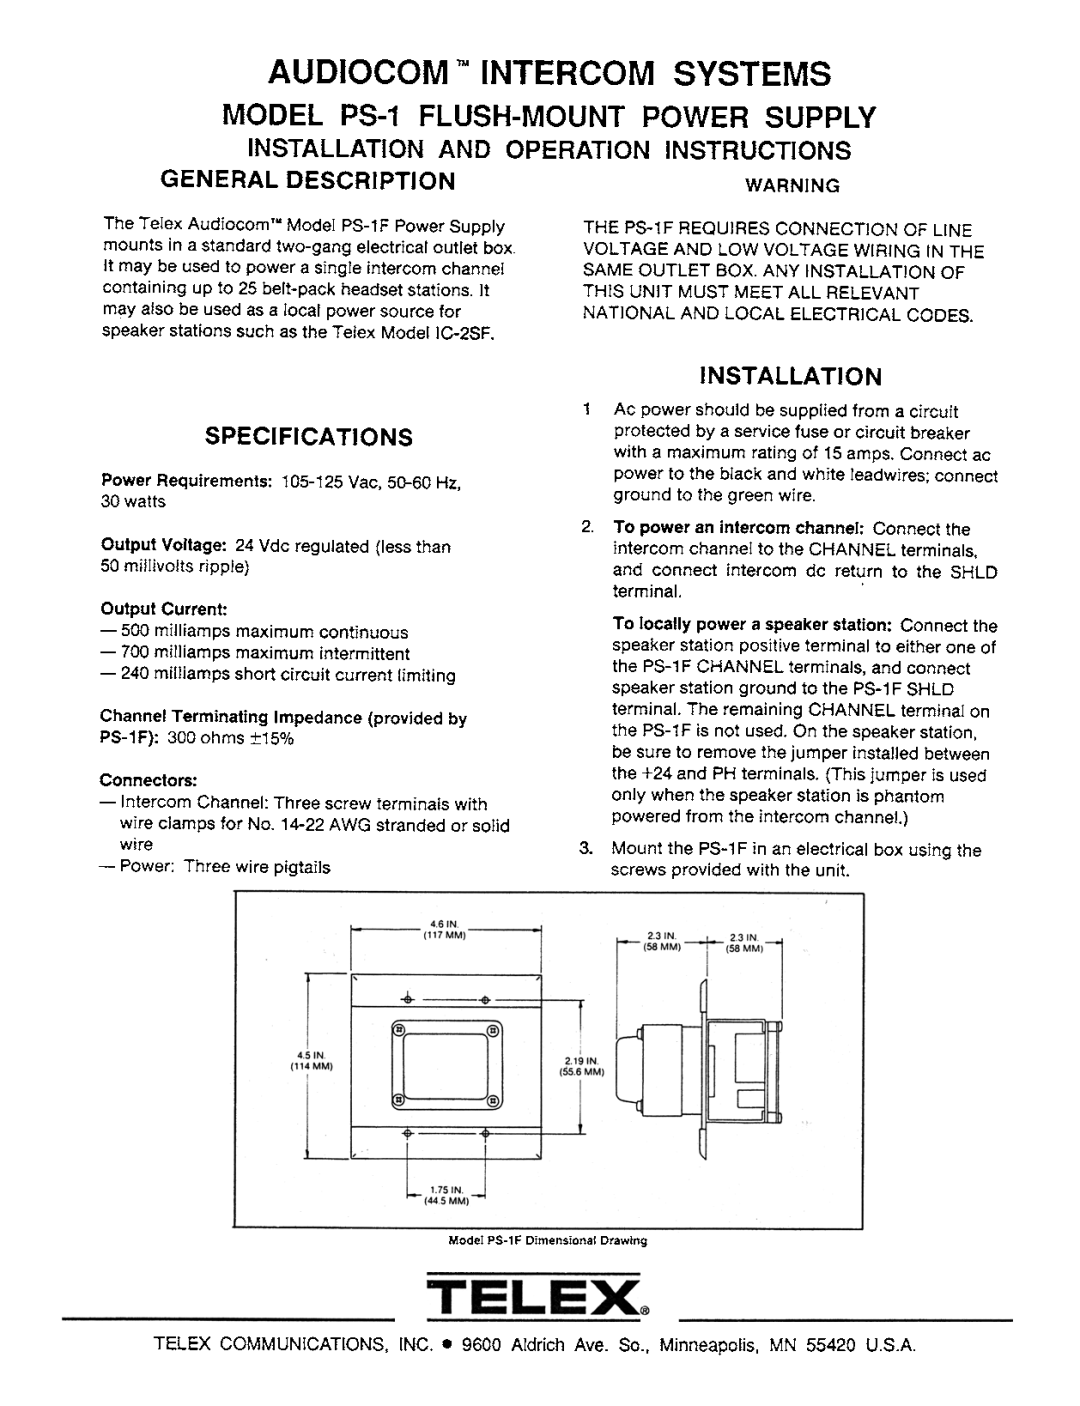 Telex PS-1 specifications Audiocom Intercom Systems, General Description, Specifications, Installation, Telex 